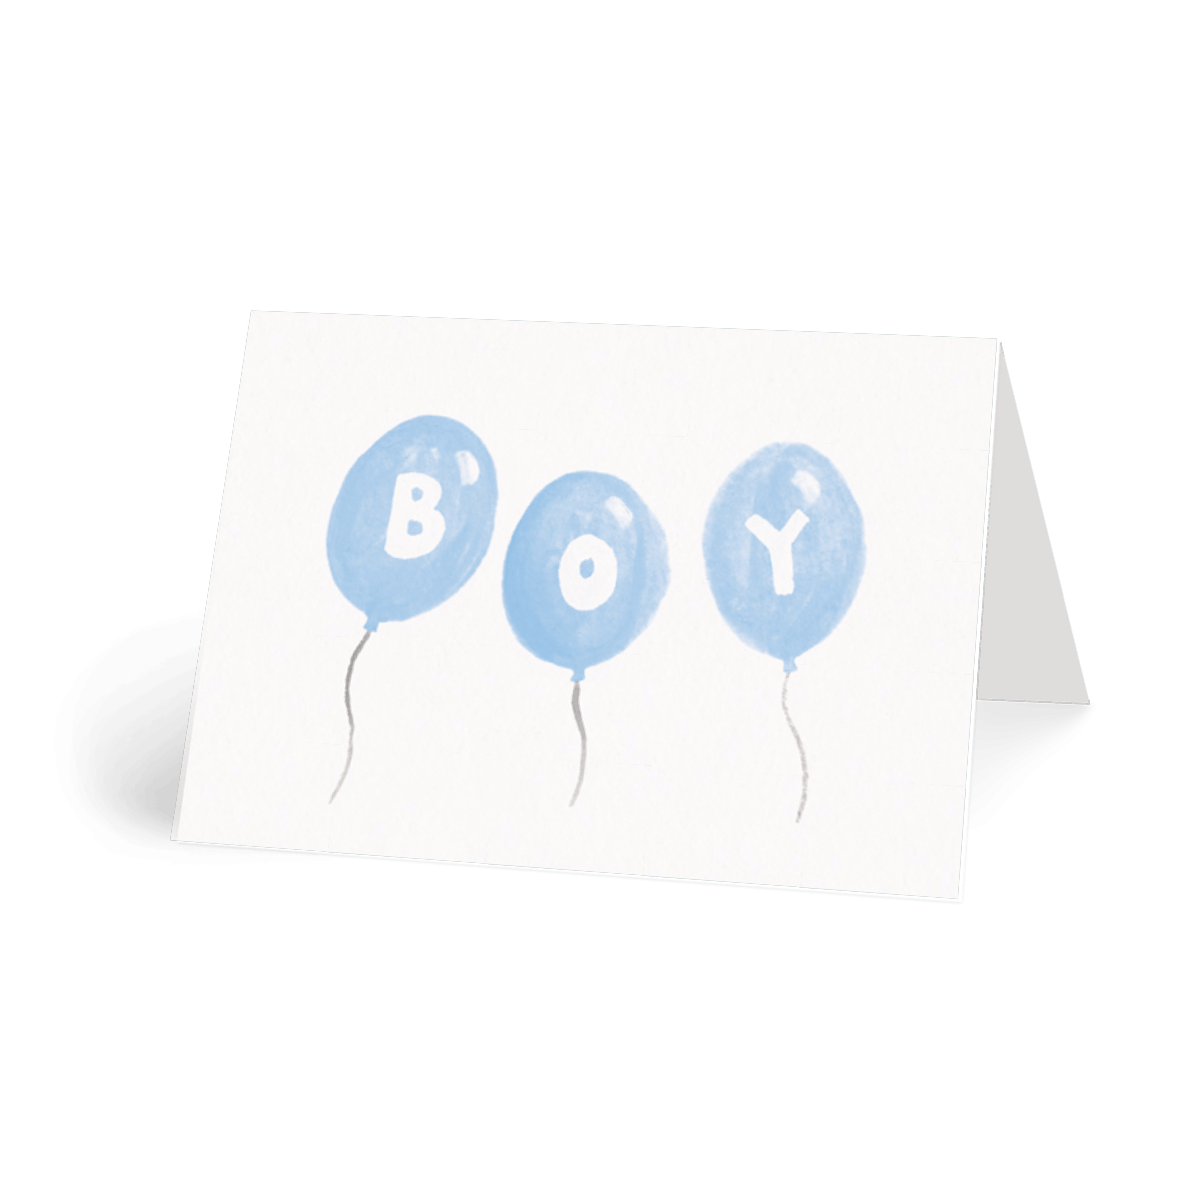 Boy Balloons